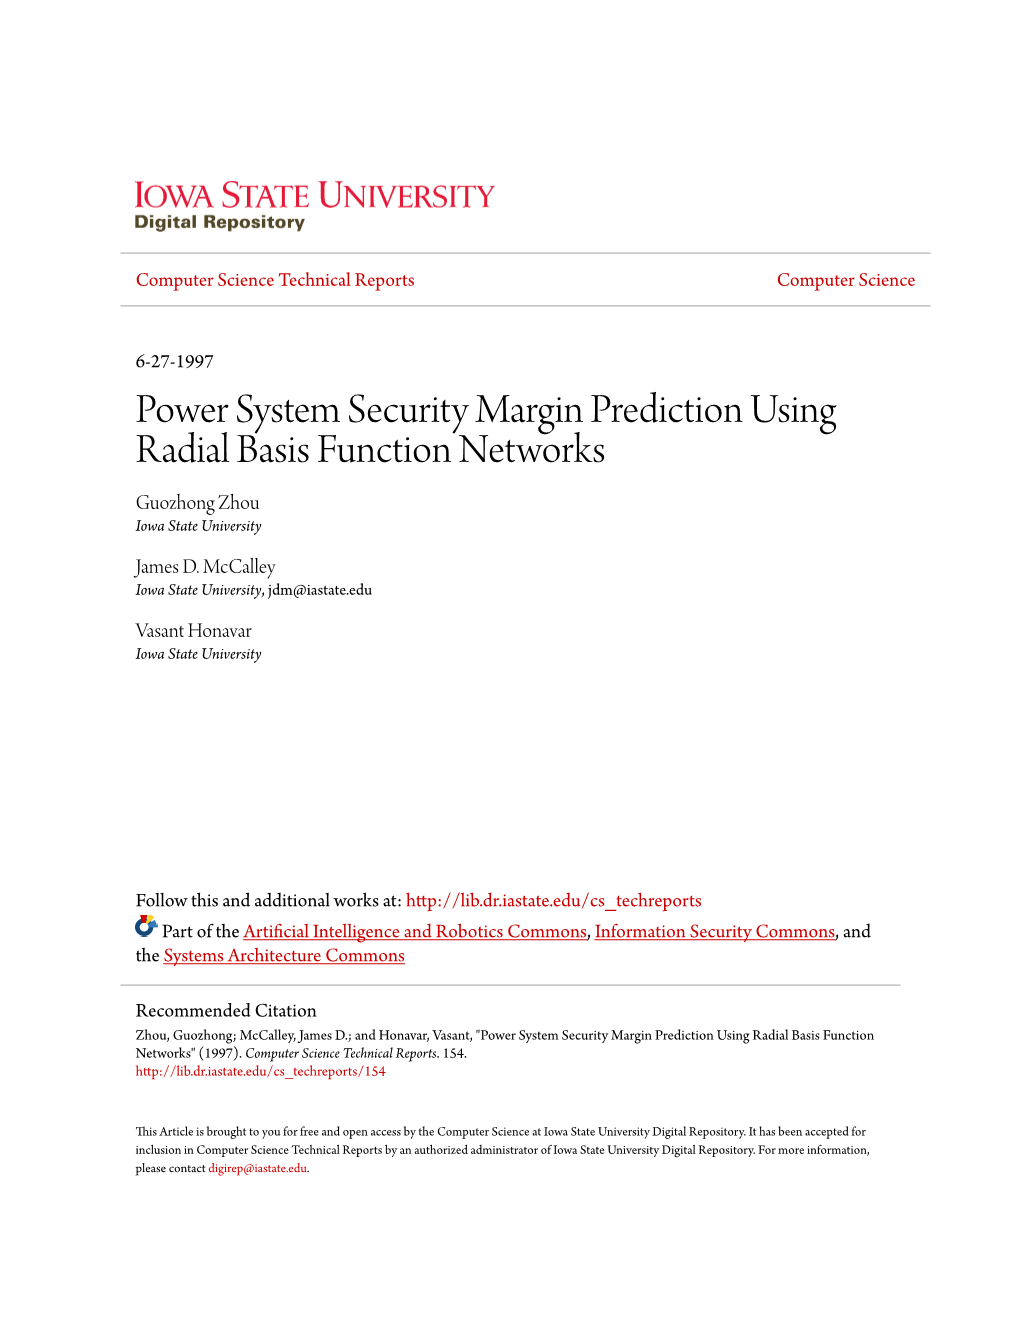 Power System Security Margin Prediction Using Radial Basis Function Networks Guozhong Zhou Iowa State University